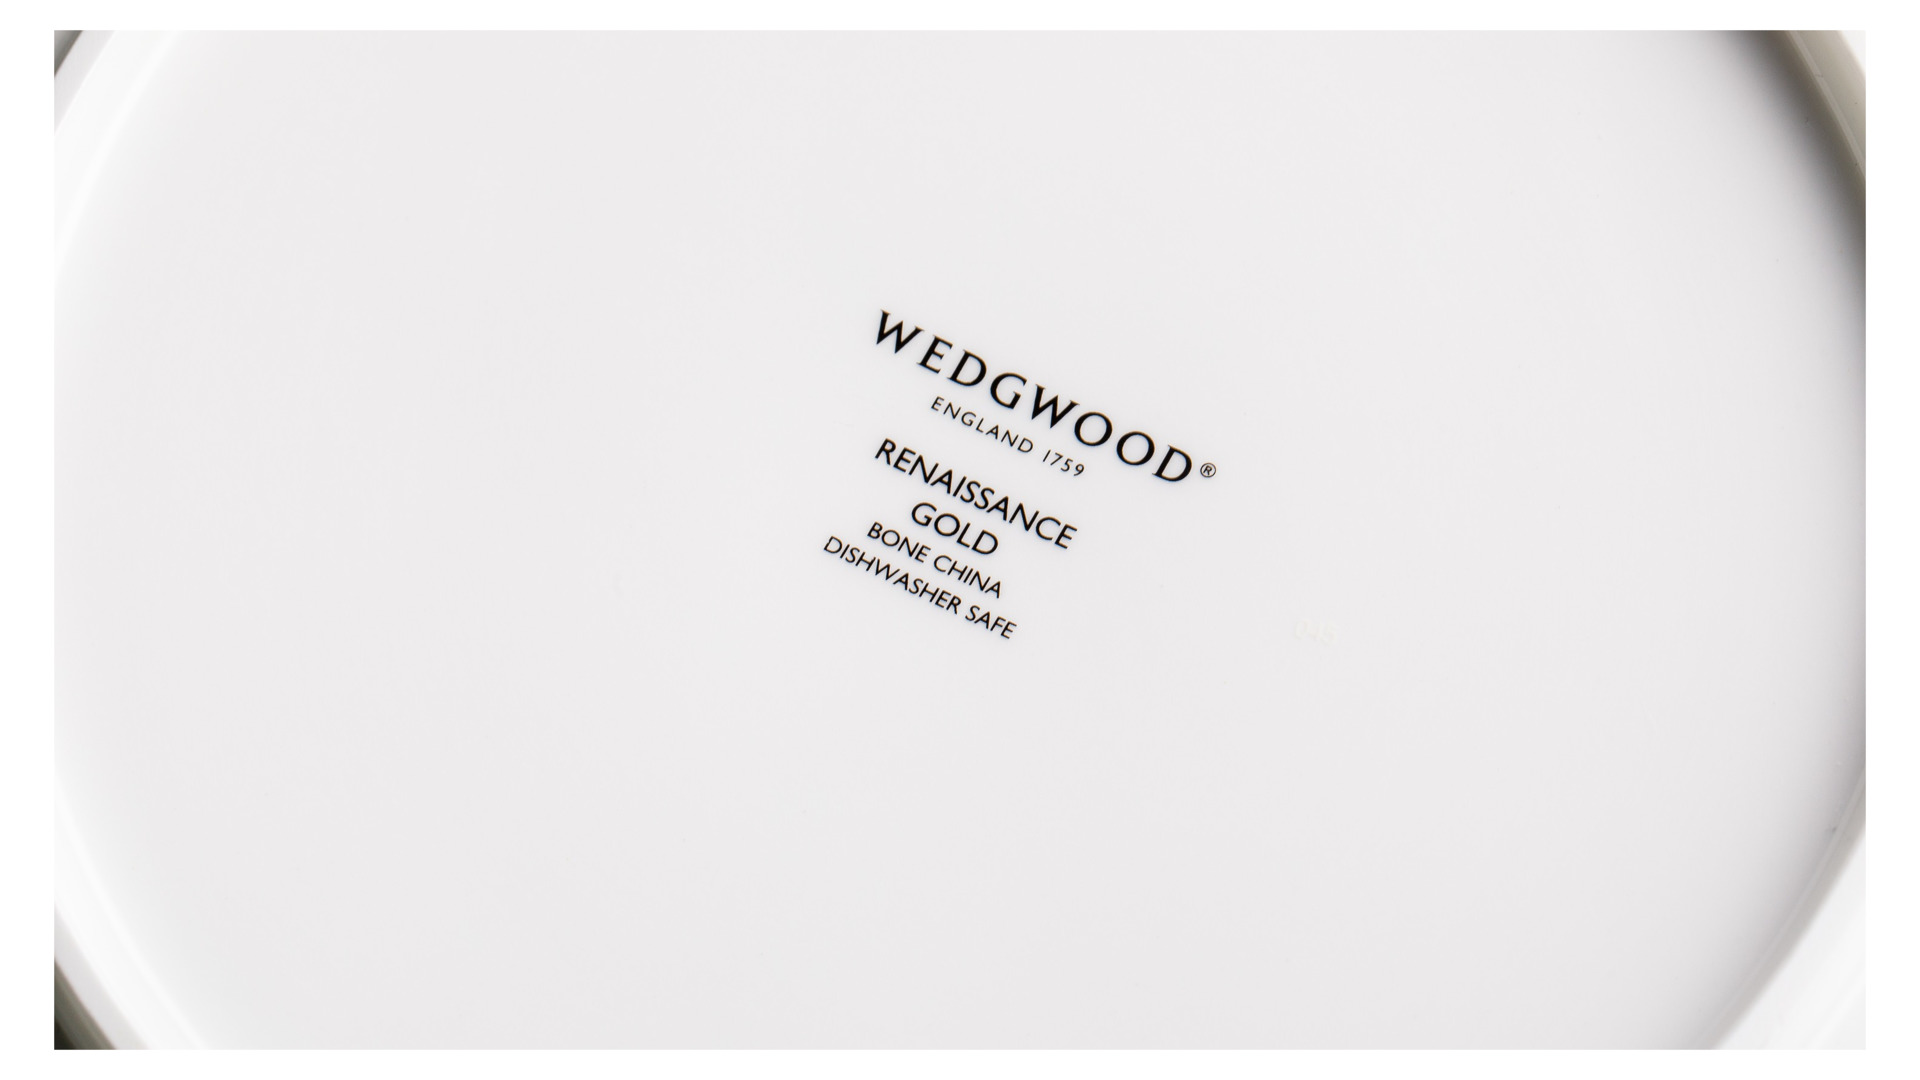 Сервиз столовый Wedgwood Ренессанс на 6 персон 19 предметов, фарфор